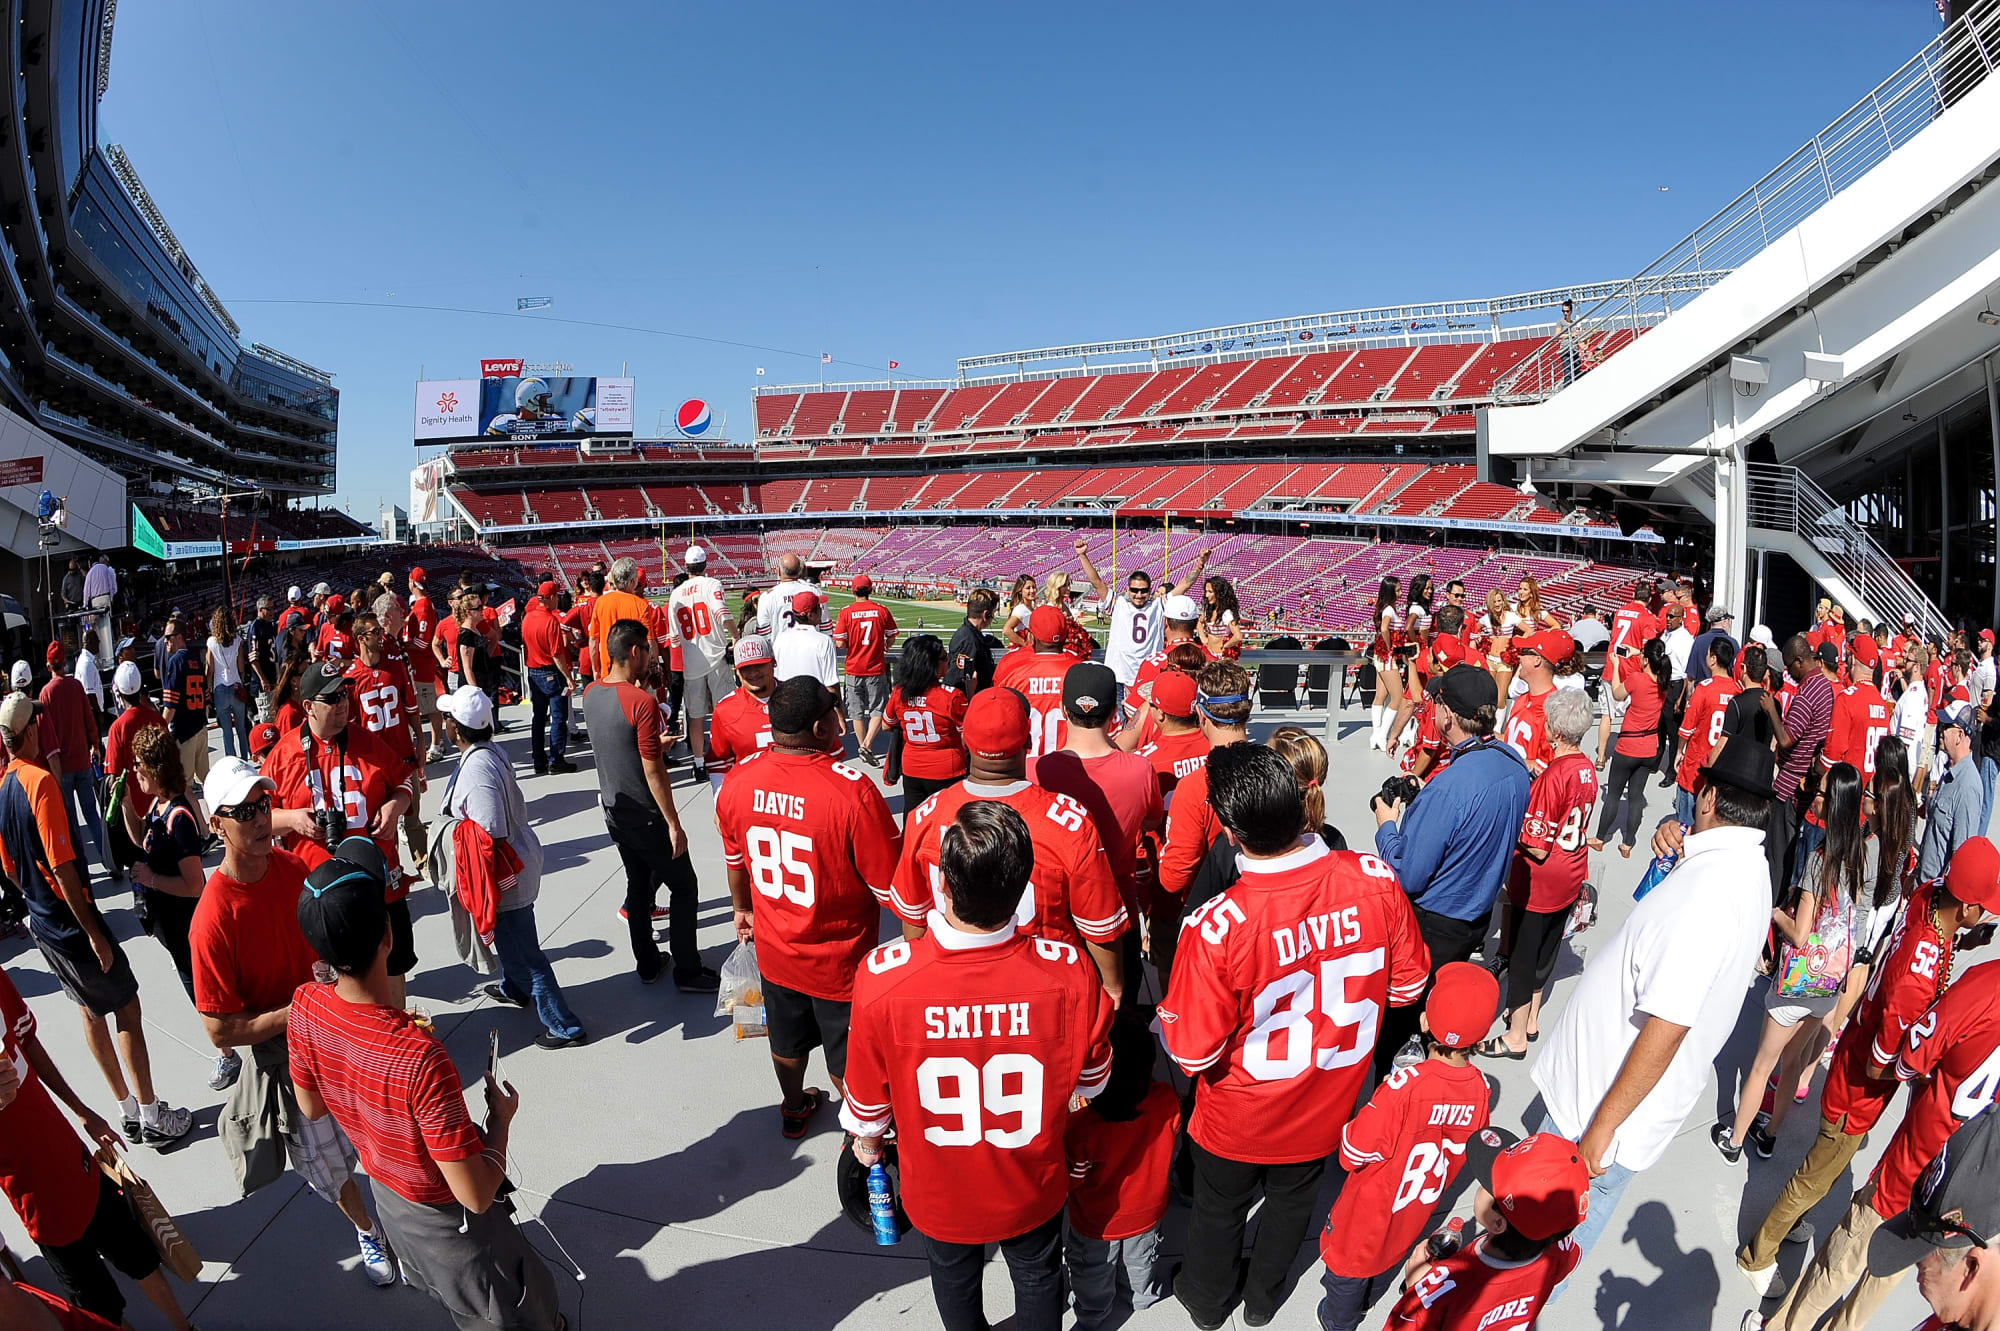 Levi's Stadium should drop concession prices for 49ers games